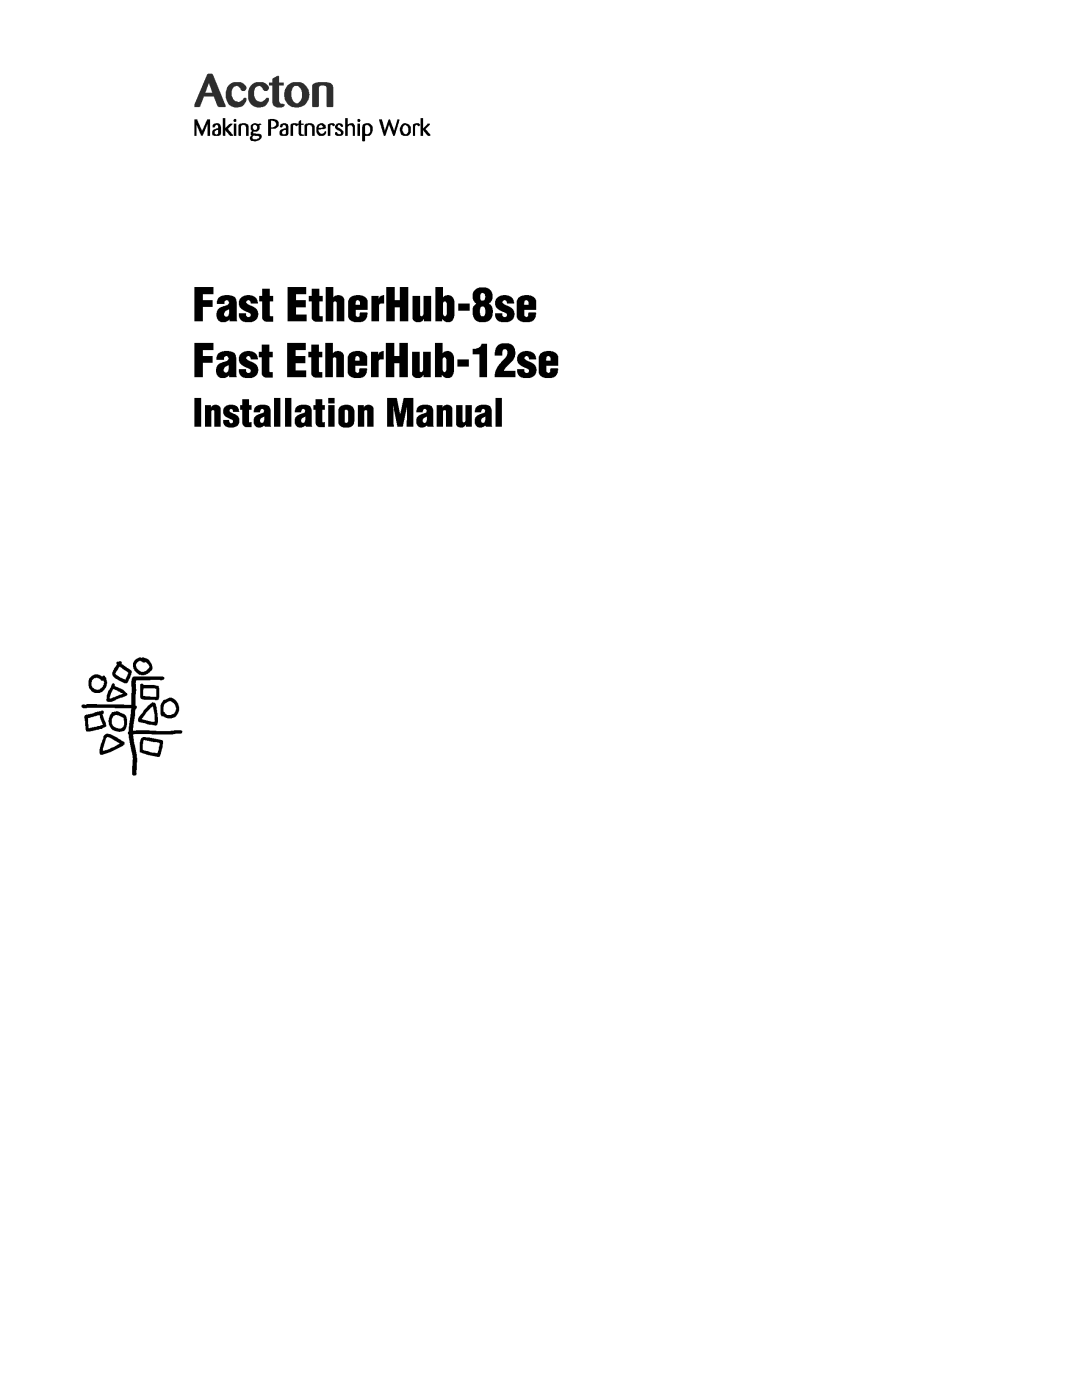 Accton Technology manual Fast EtherHub-12se, Inoggodji*Ipg 